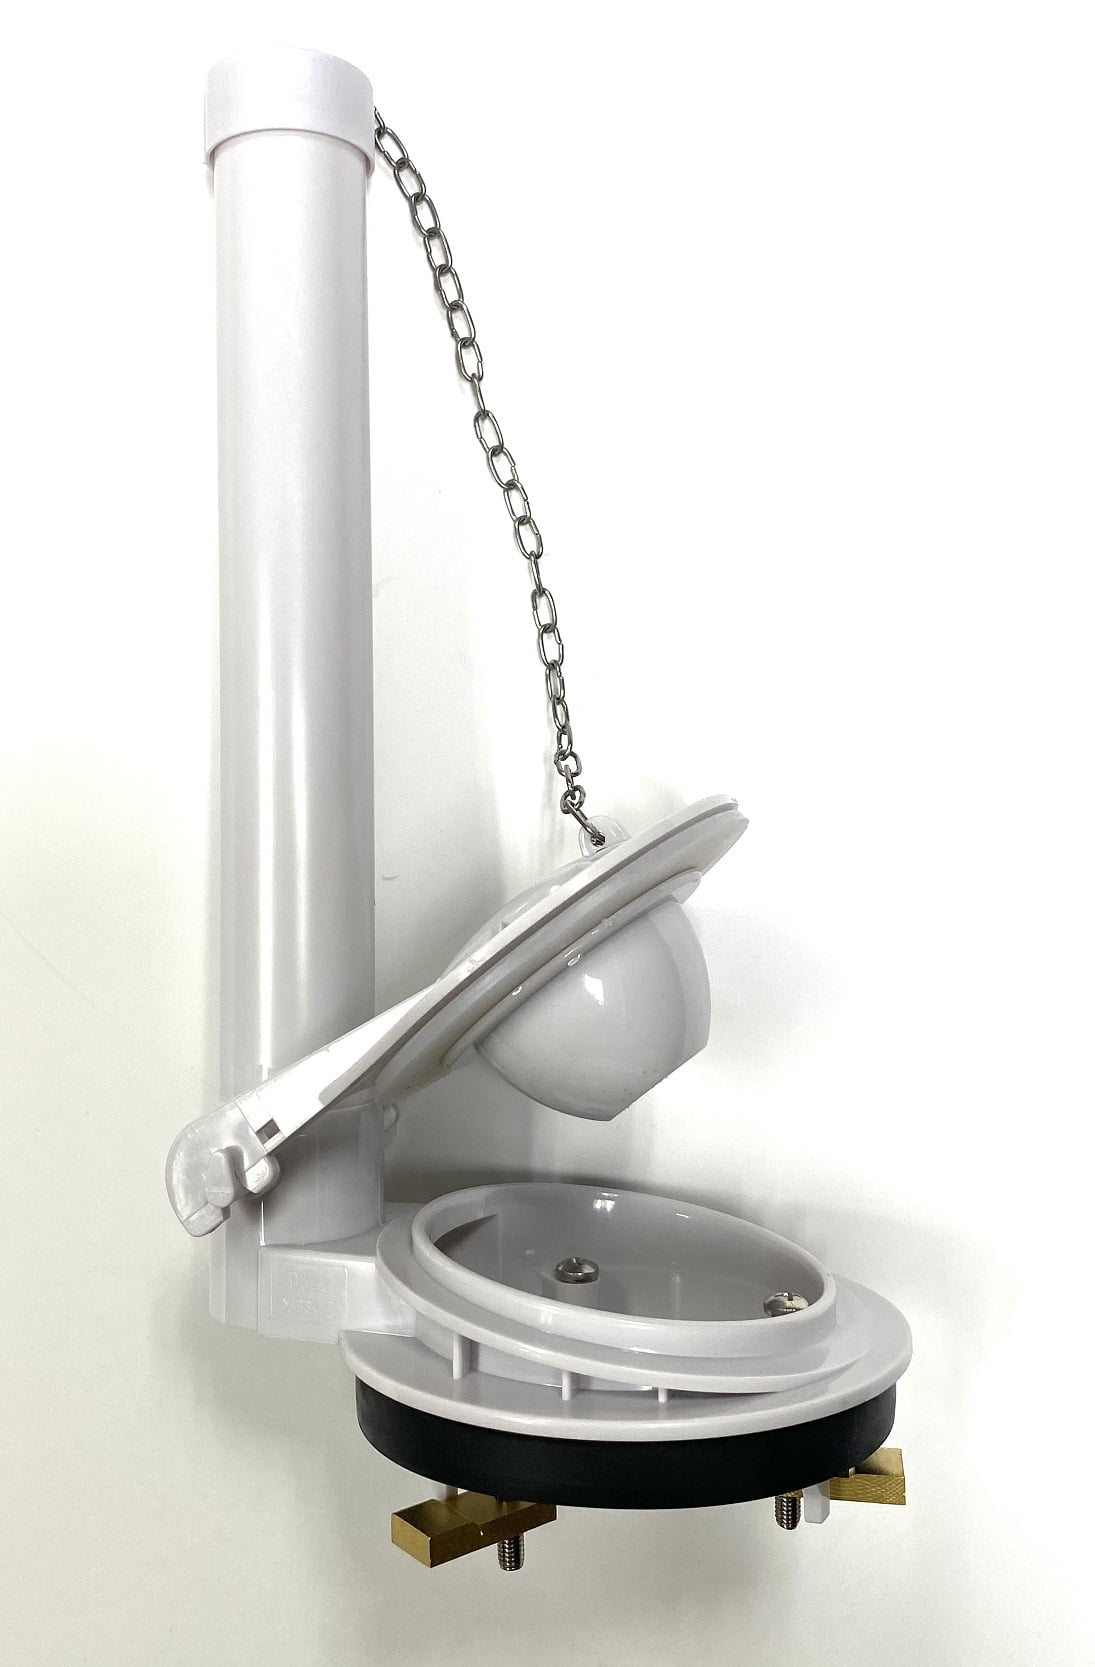 Toto 3.2 Toilet Valve for One Piece Toilet, Three Locking Bars, 9 inch Overflow Tube. - Walmart.com